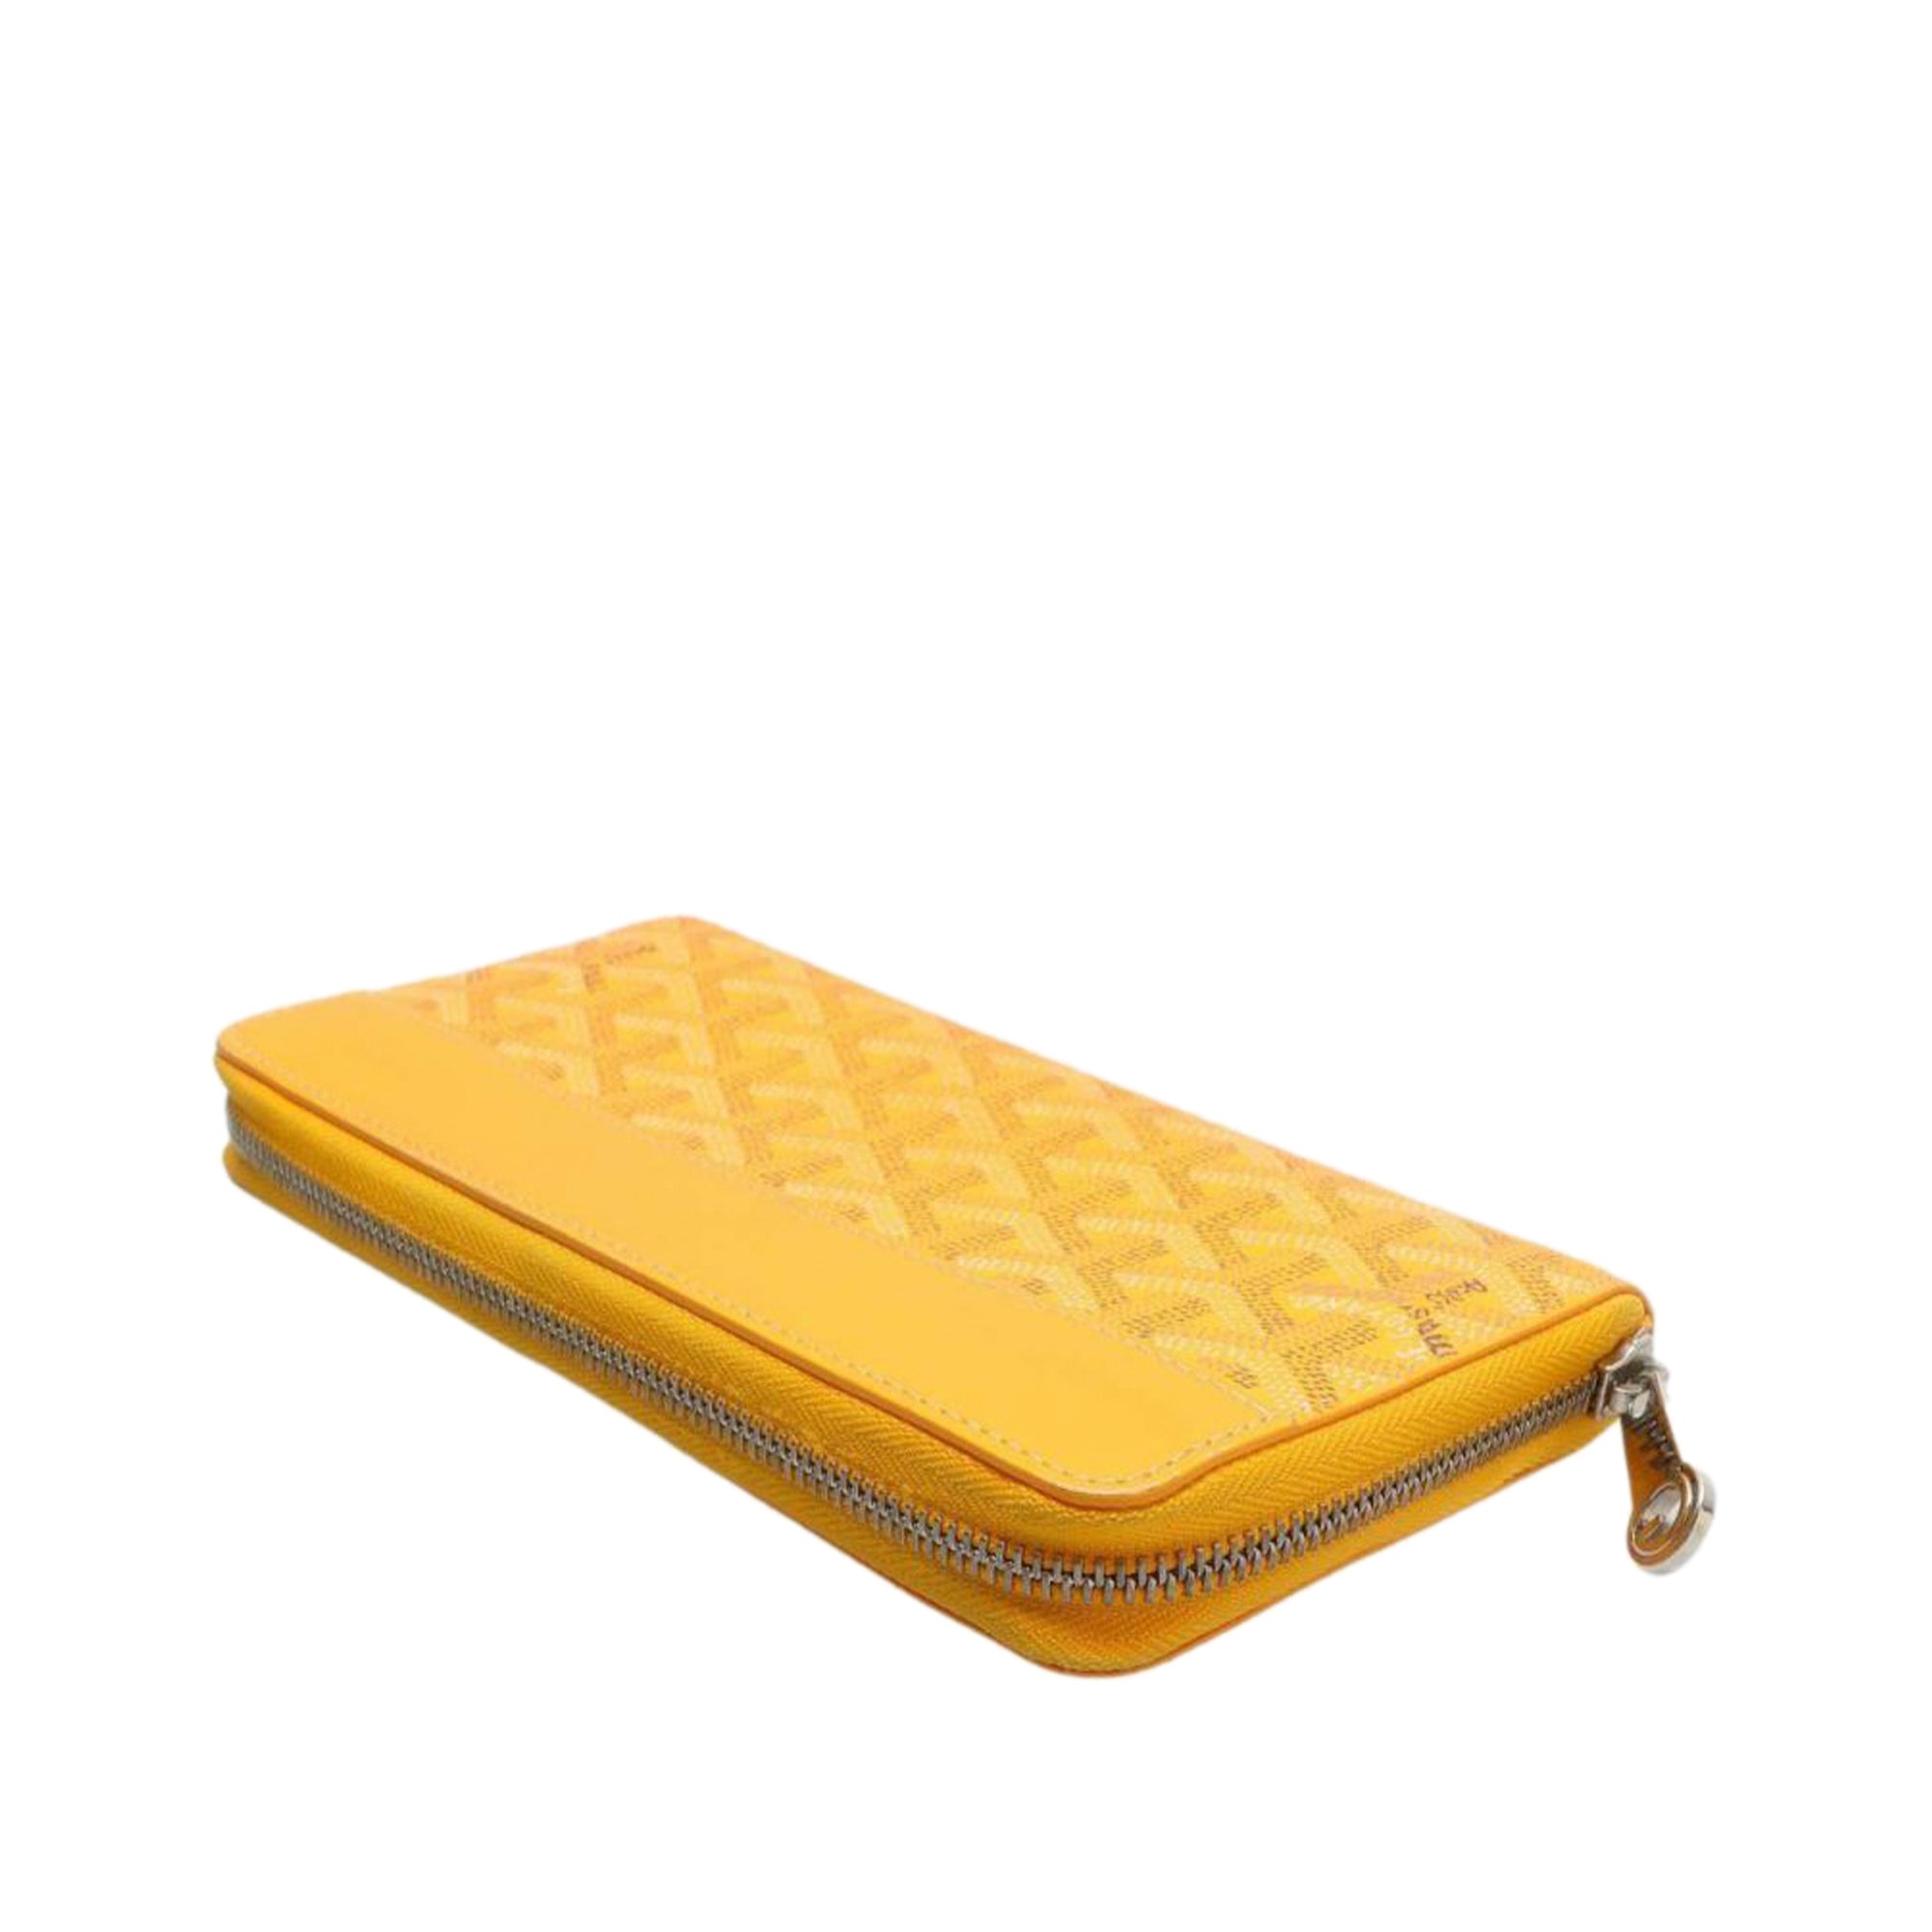 Goyard Matignon Wallet GM Yellow in Canvas/Calfskin with